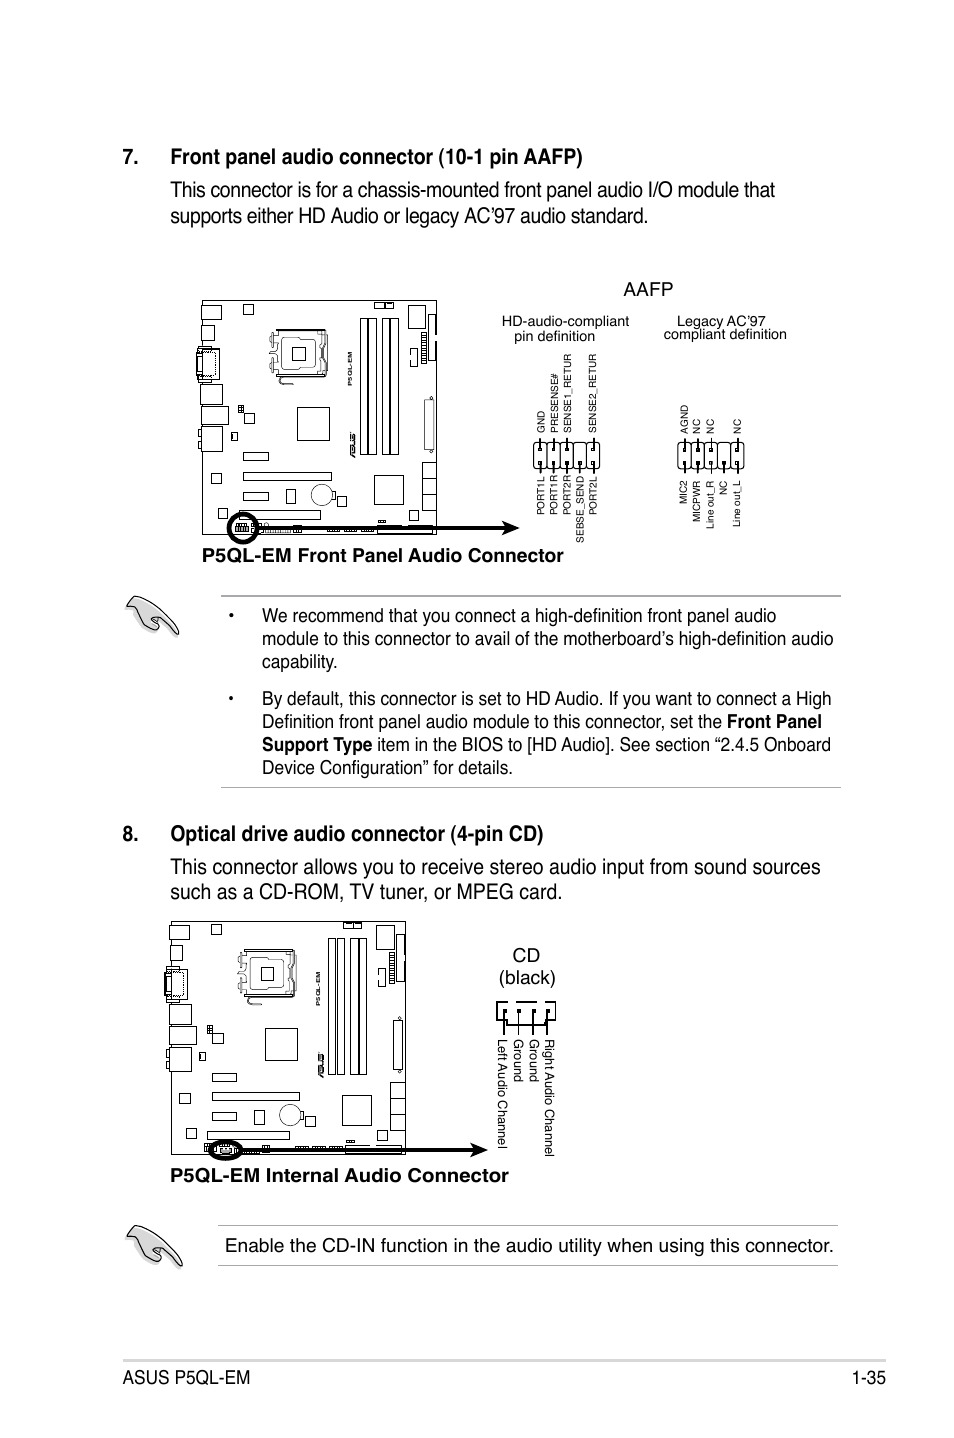 Asus p5ql-em 1-35, Cd (black), P5ql-em front panel audio connector | Asus  P5QL-EM User Manual | Page 47 / 112 | Original mode